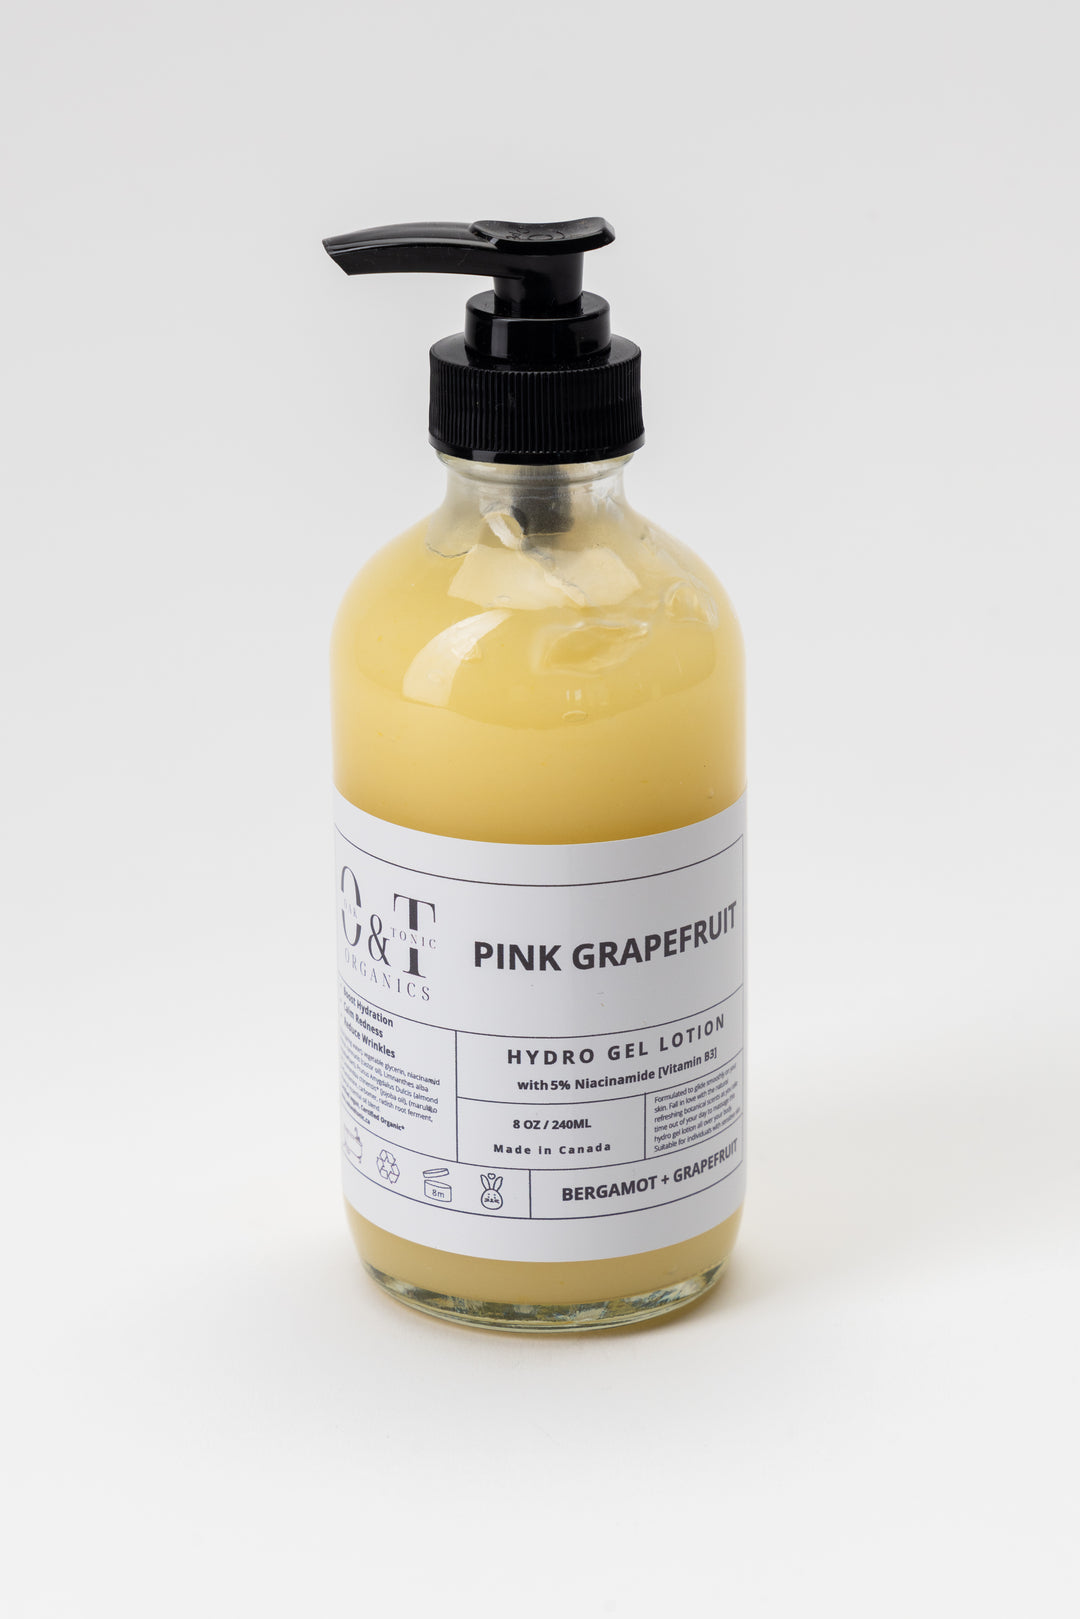 Oak & Tonic Organics | Pink Grapefruit Hydro-Gel Hand & Body Lotion - Oak + Tonic